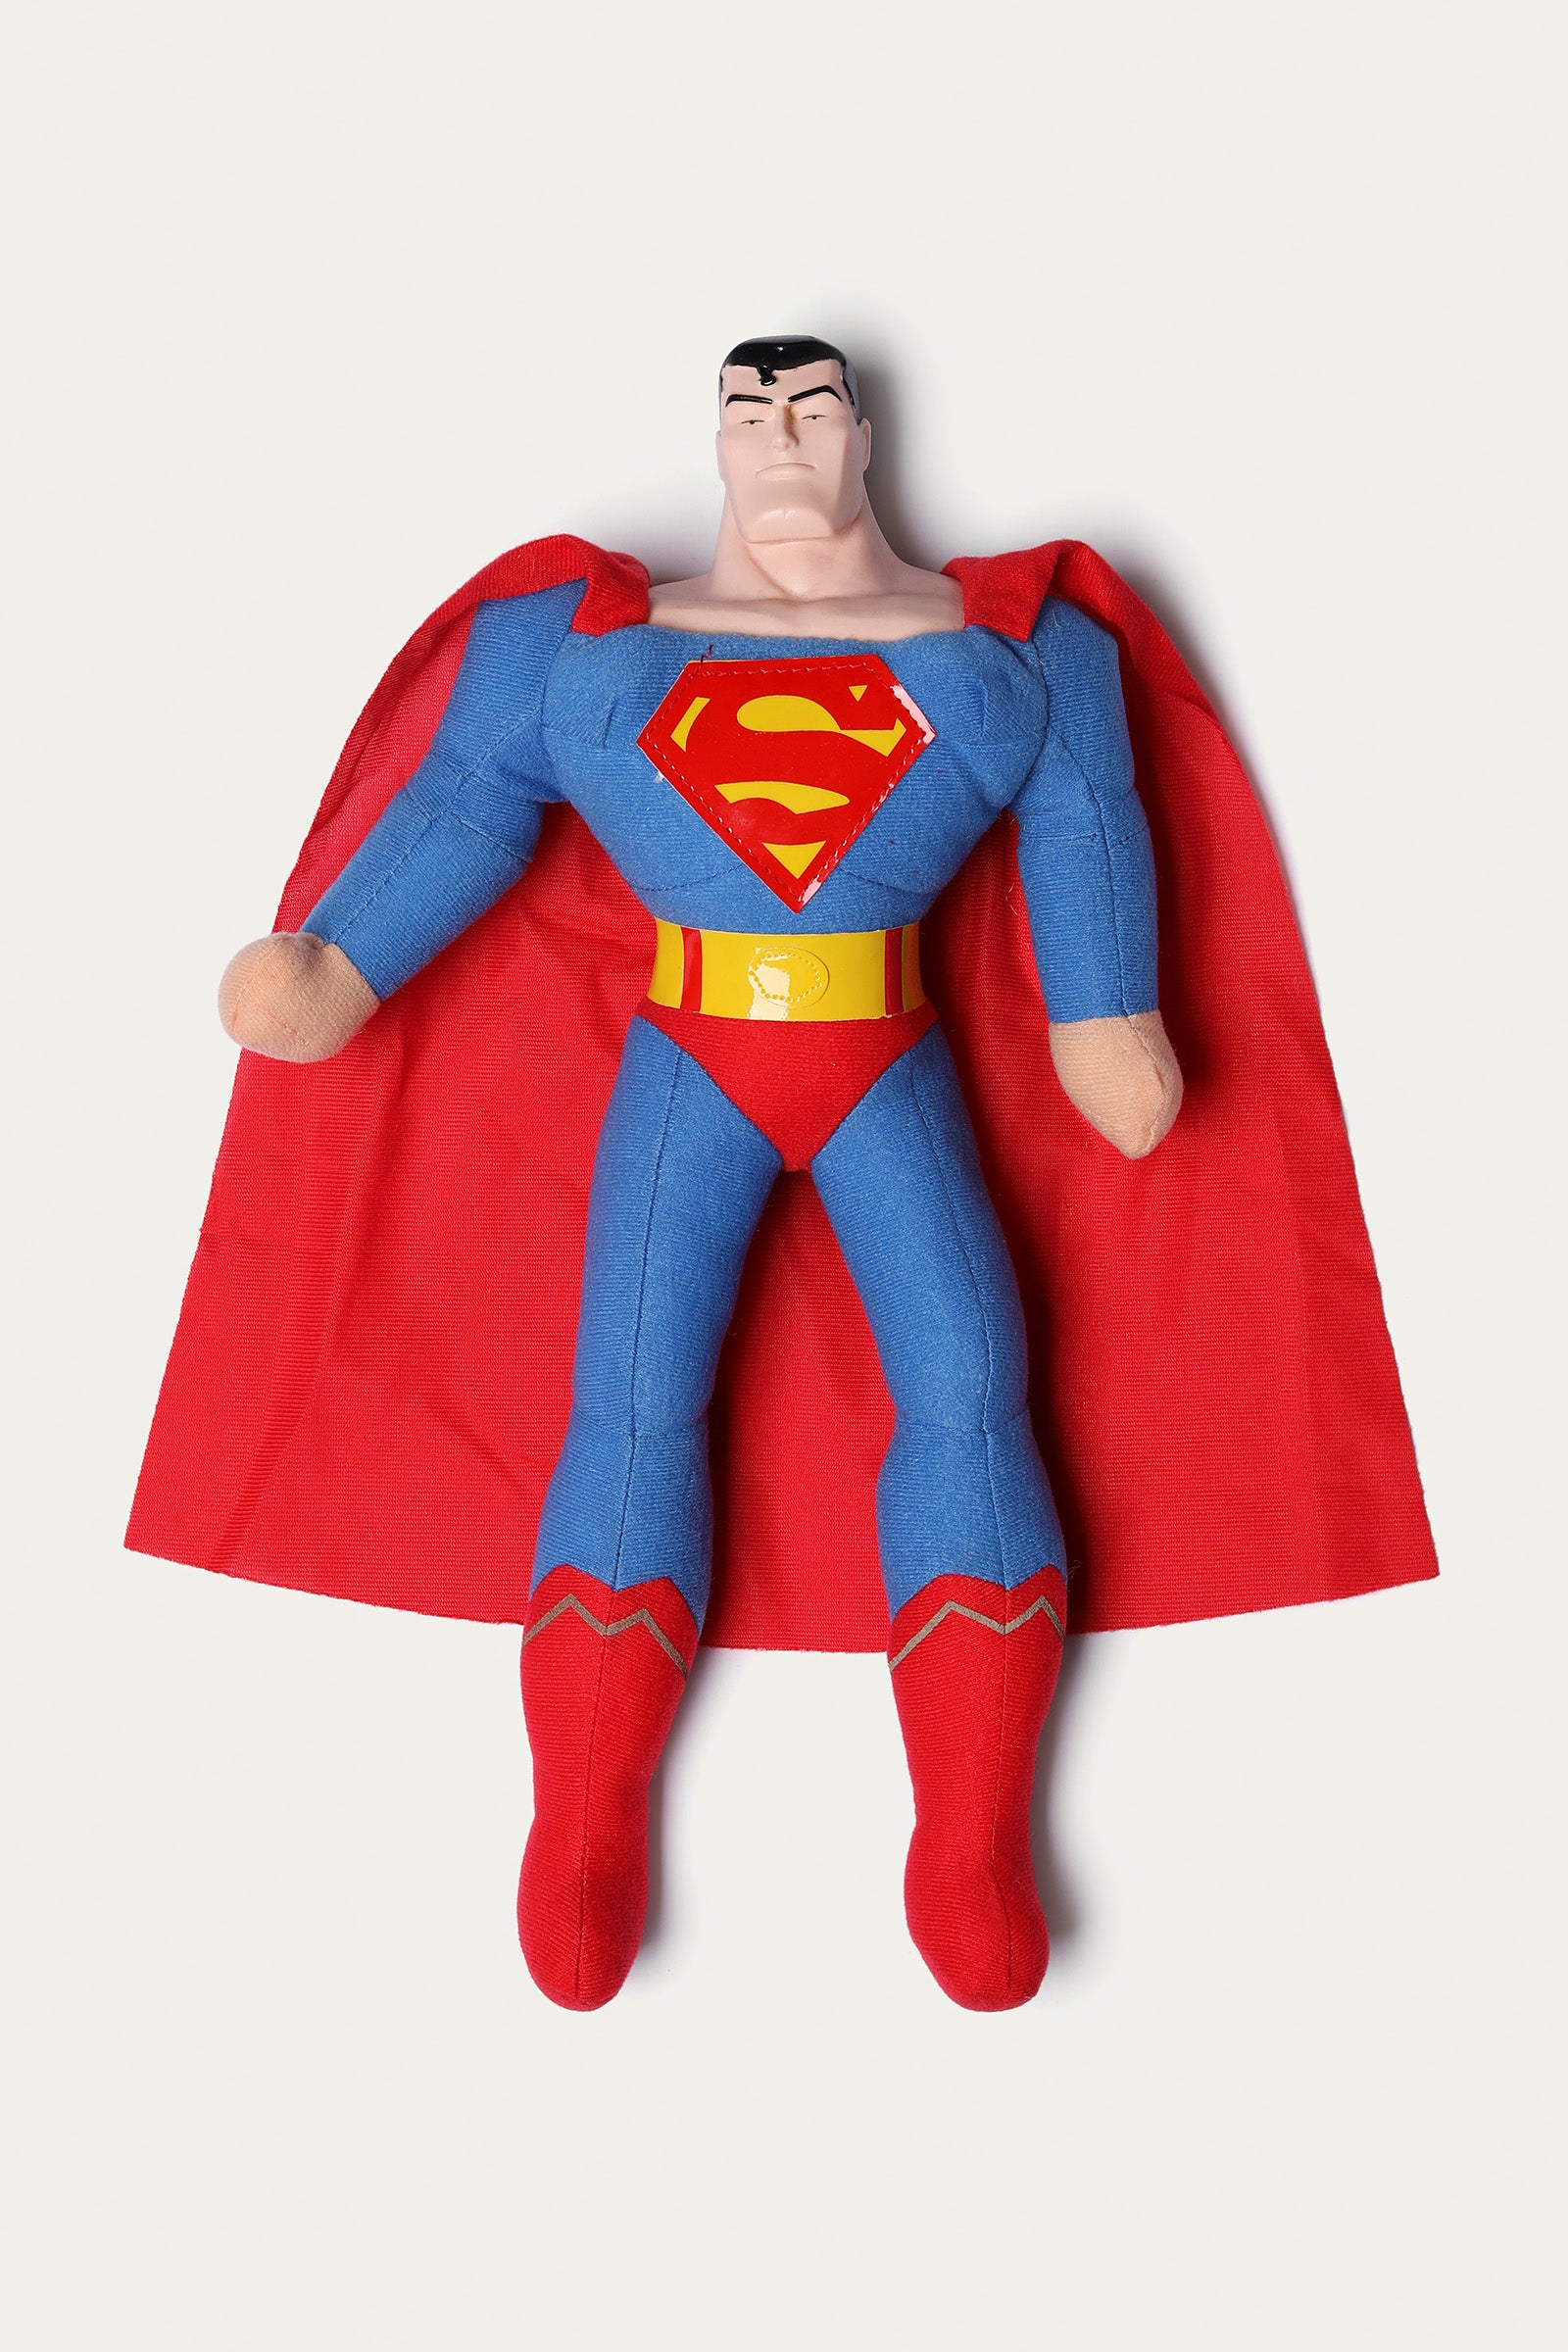 THE SUPERMAN (STY-1223